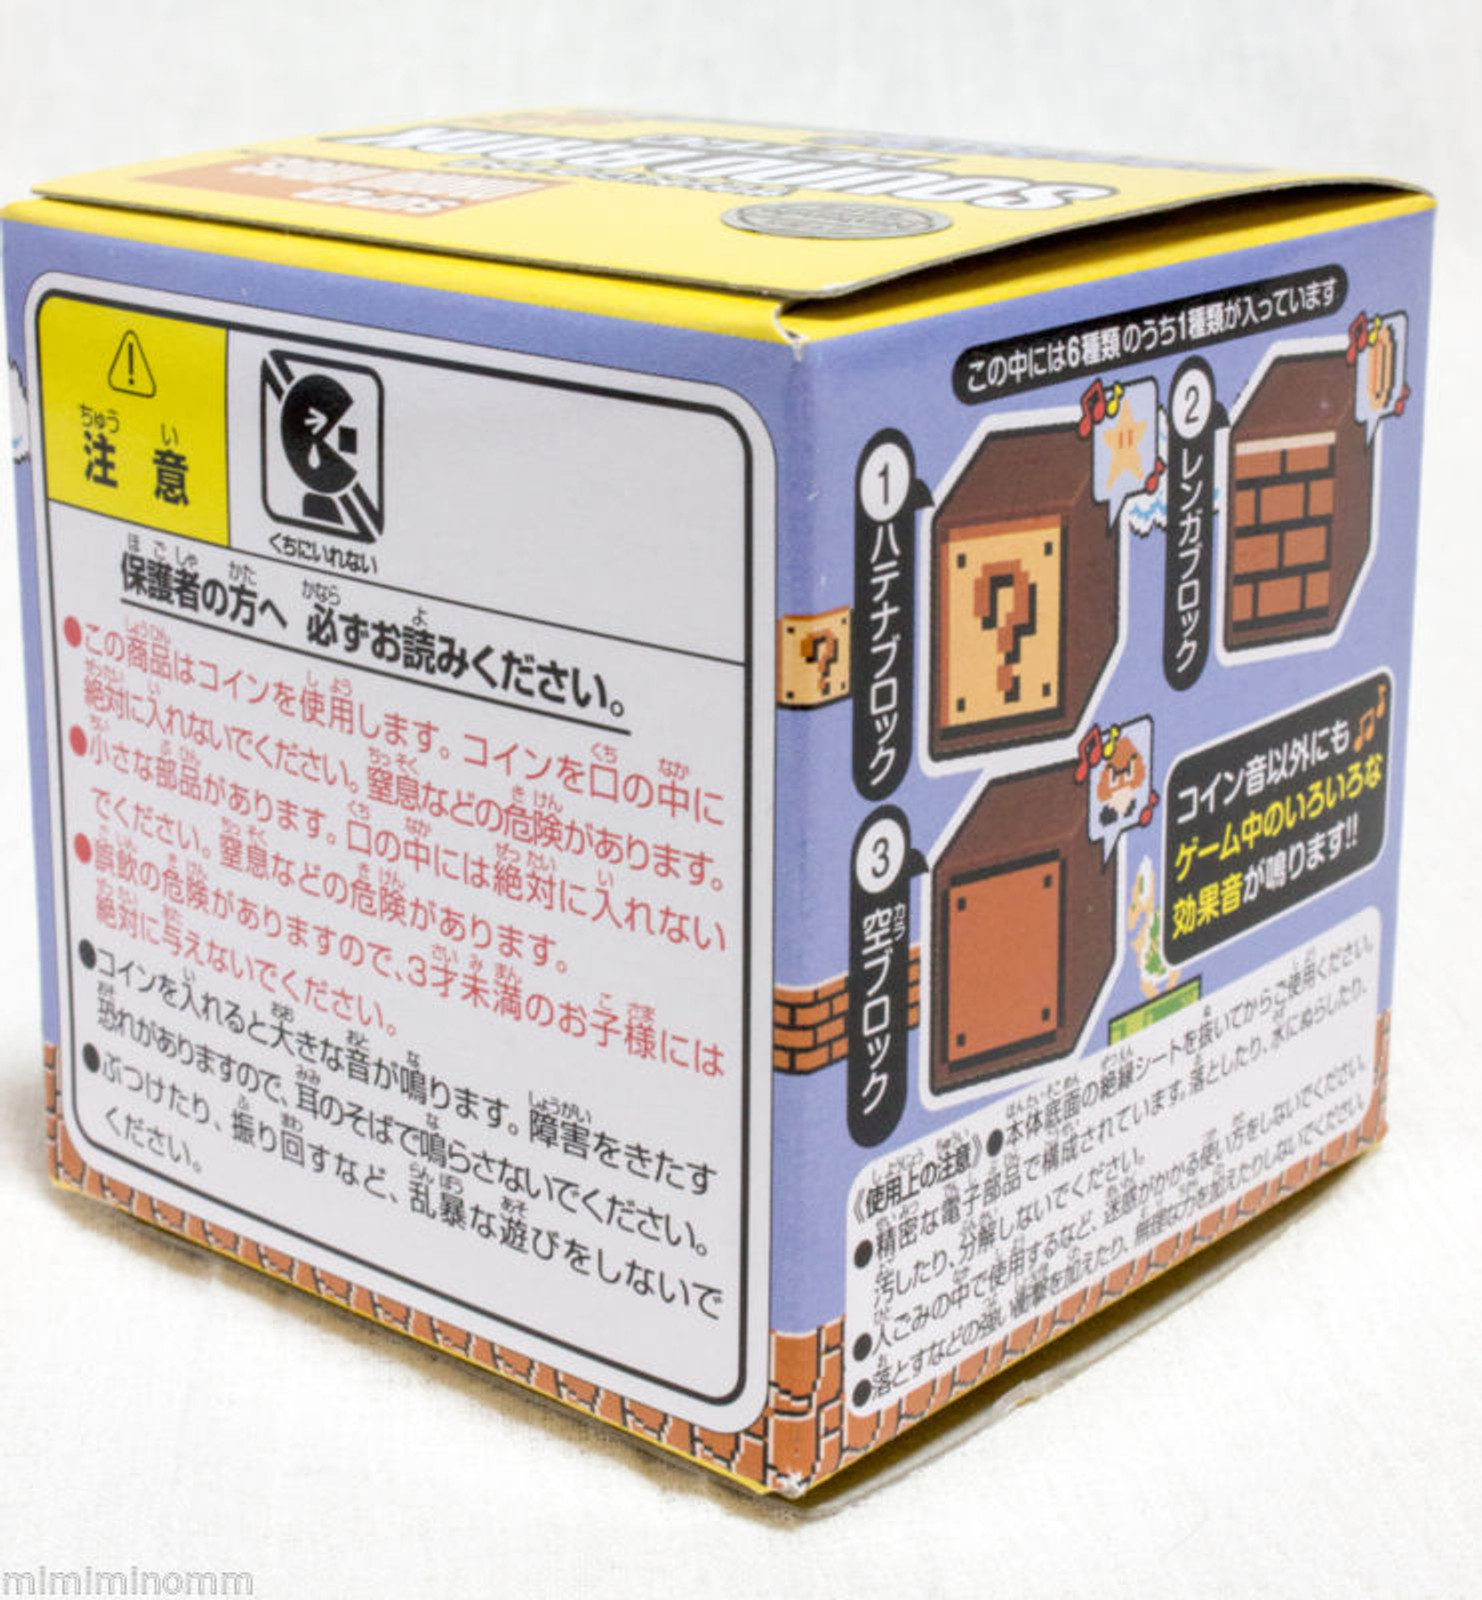 Super Mario Bros. Sound Bank Retro Brick Block Underground Figure JAPAN NES